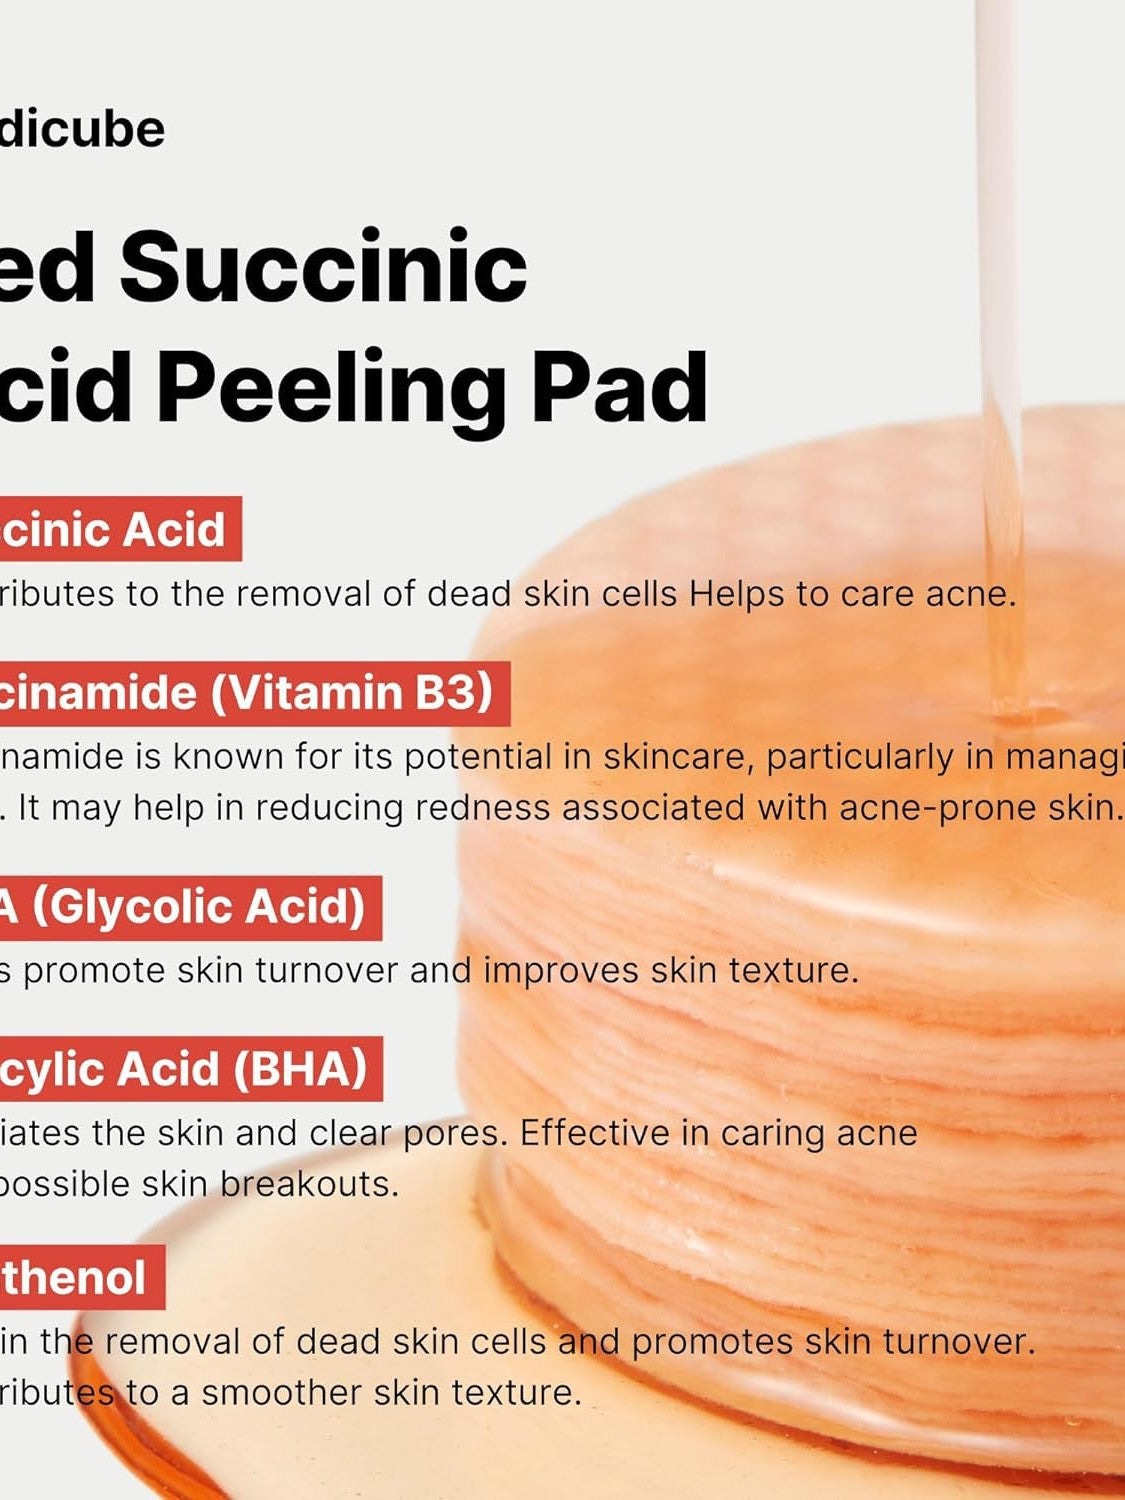 Medicube Red Succinic Acid Panthenol Pad